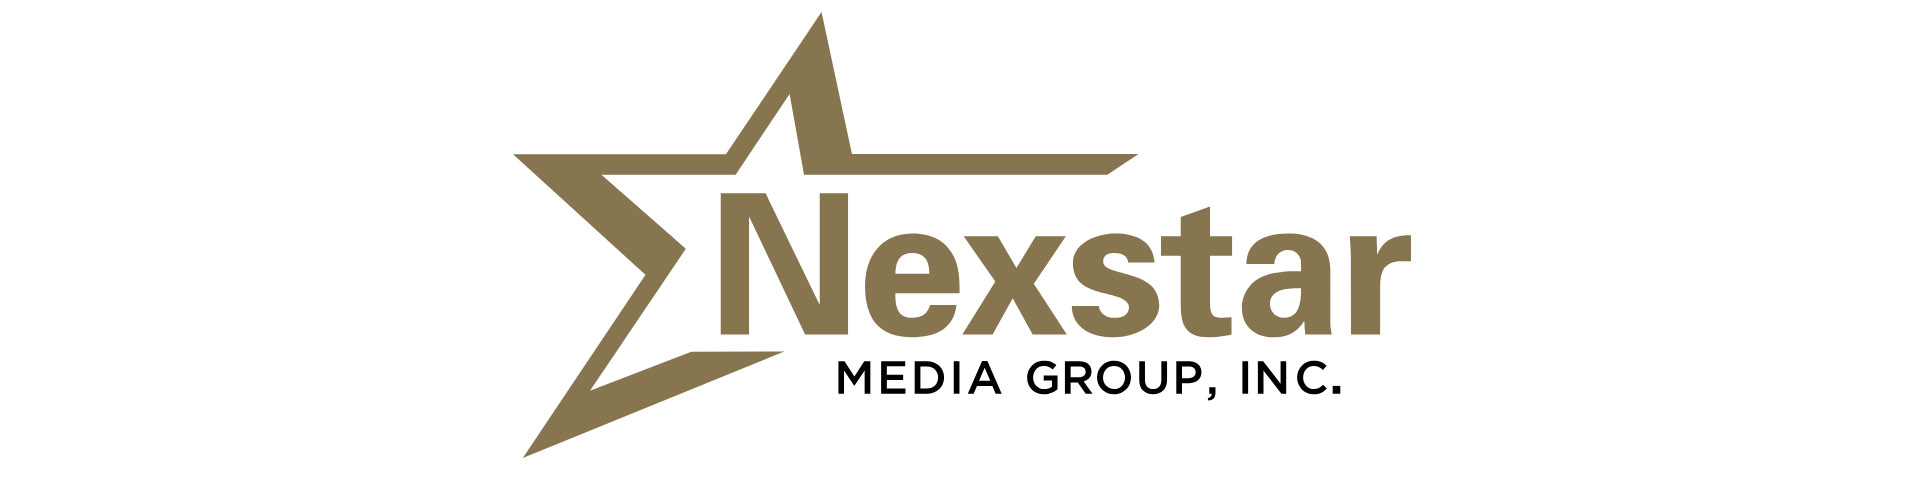 Image for Nexstar Corporation